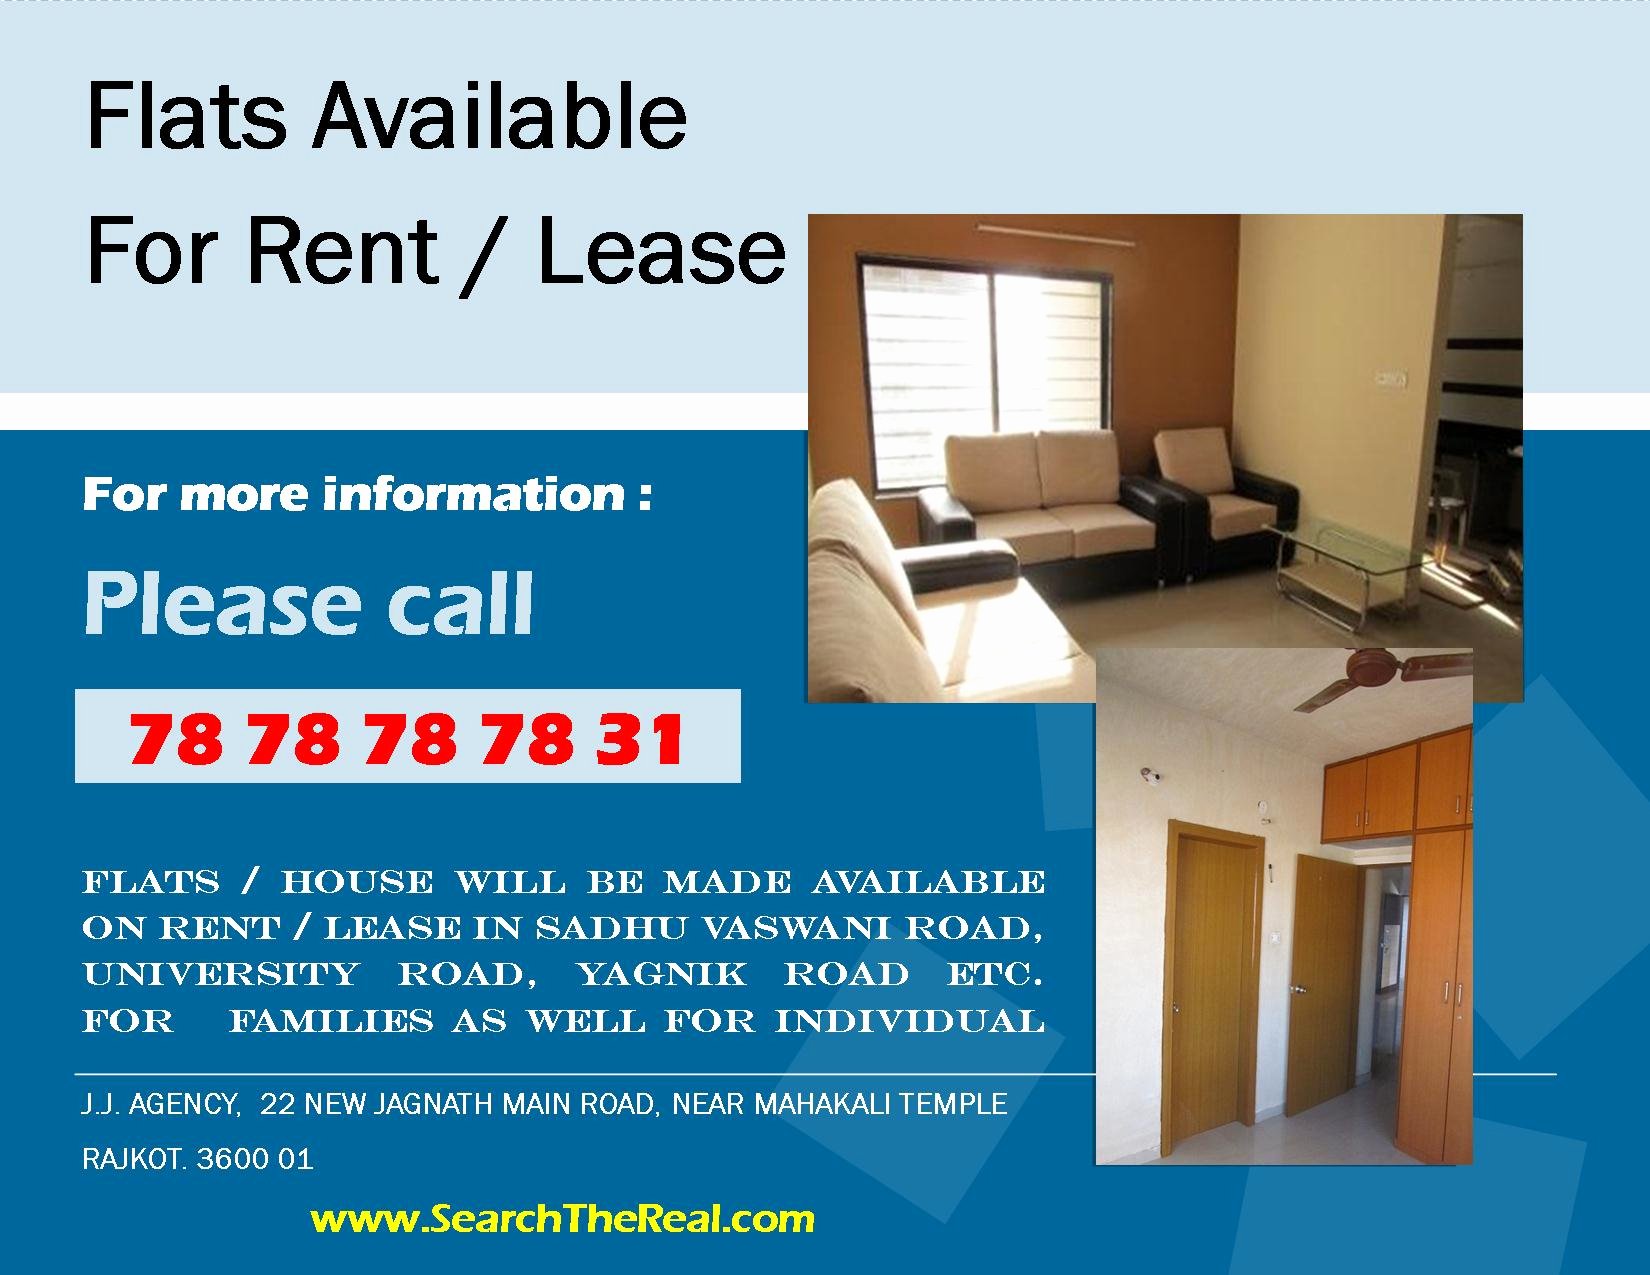 Room for Rent Flyers Beautiful Flat for Rent In Rajkot